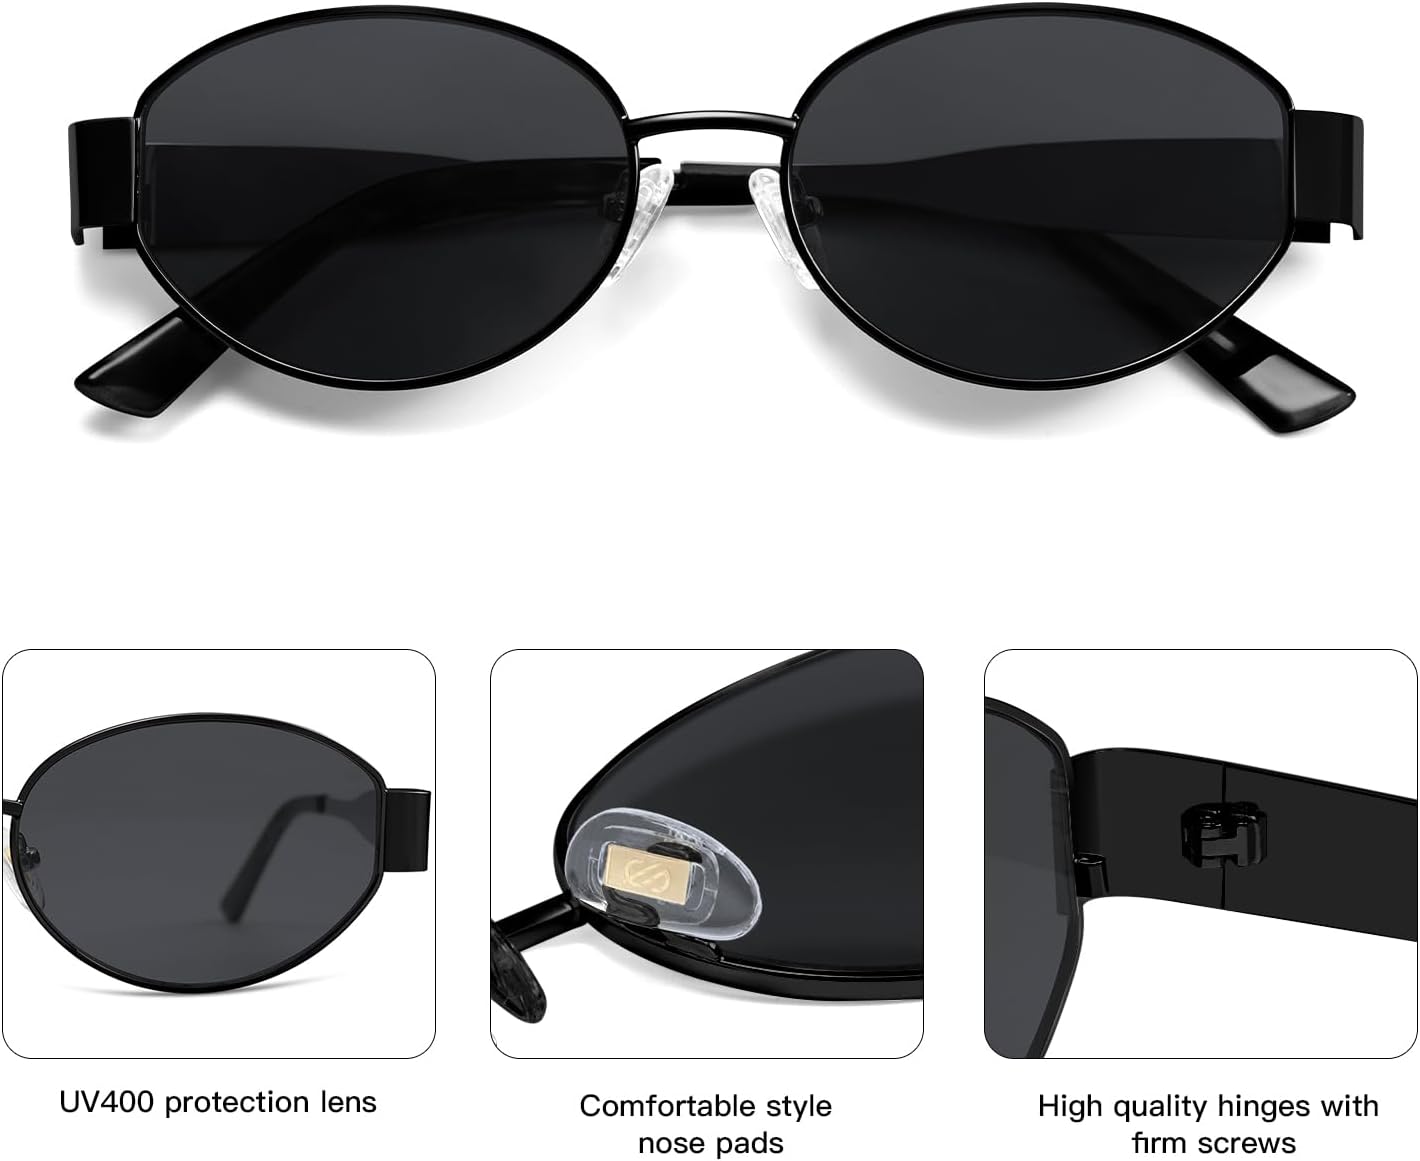 SOJOS Retro Oval Sunglasses for Women Men Trendy Sun Glasses Classic Shades UV400 Protection SJ1217